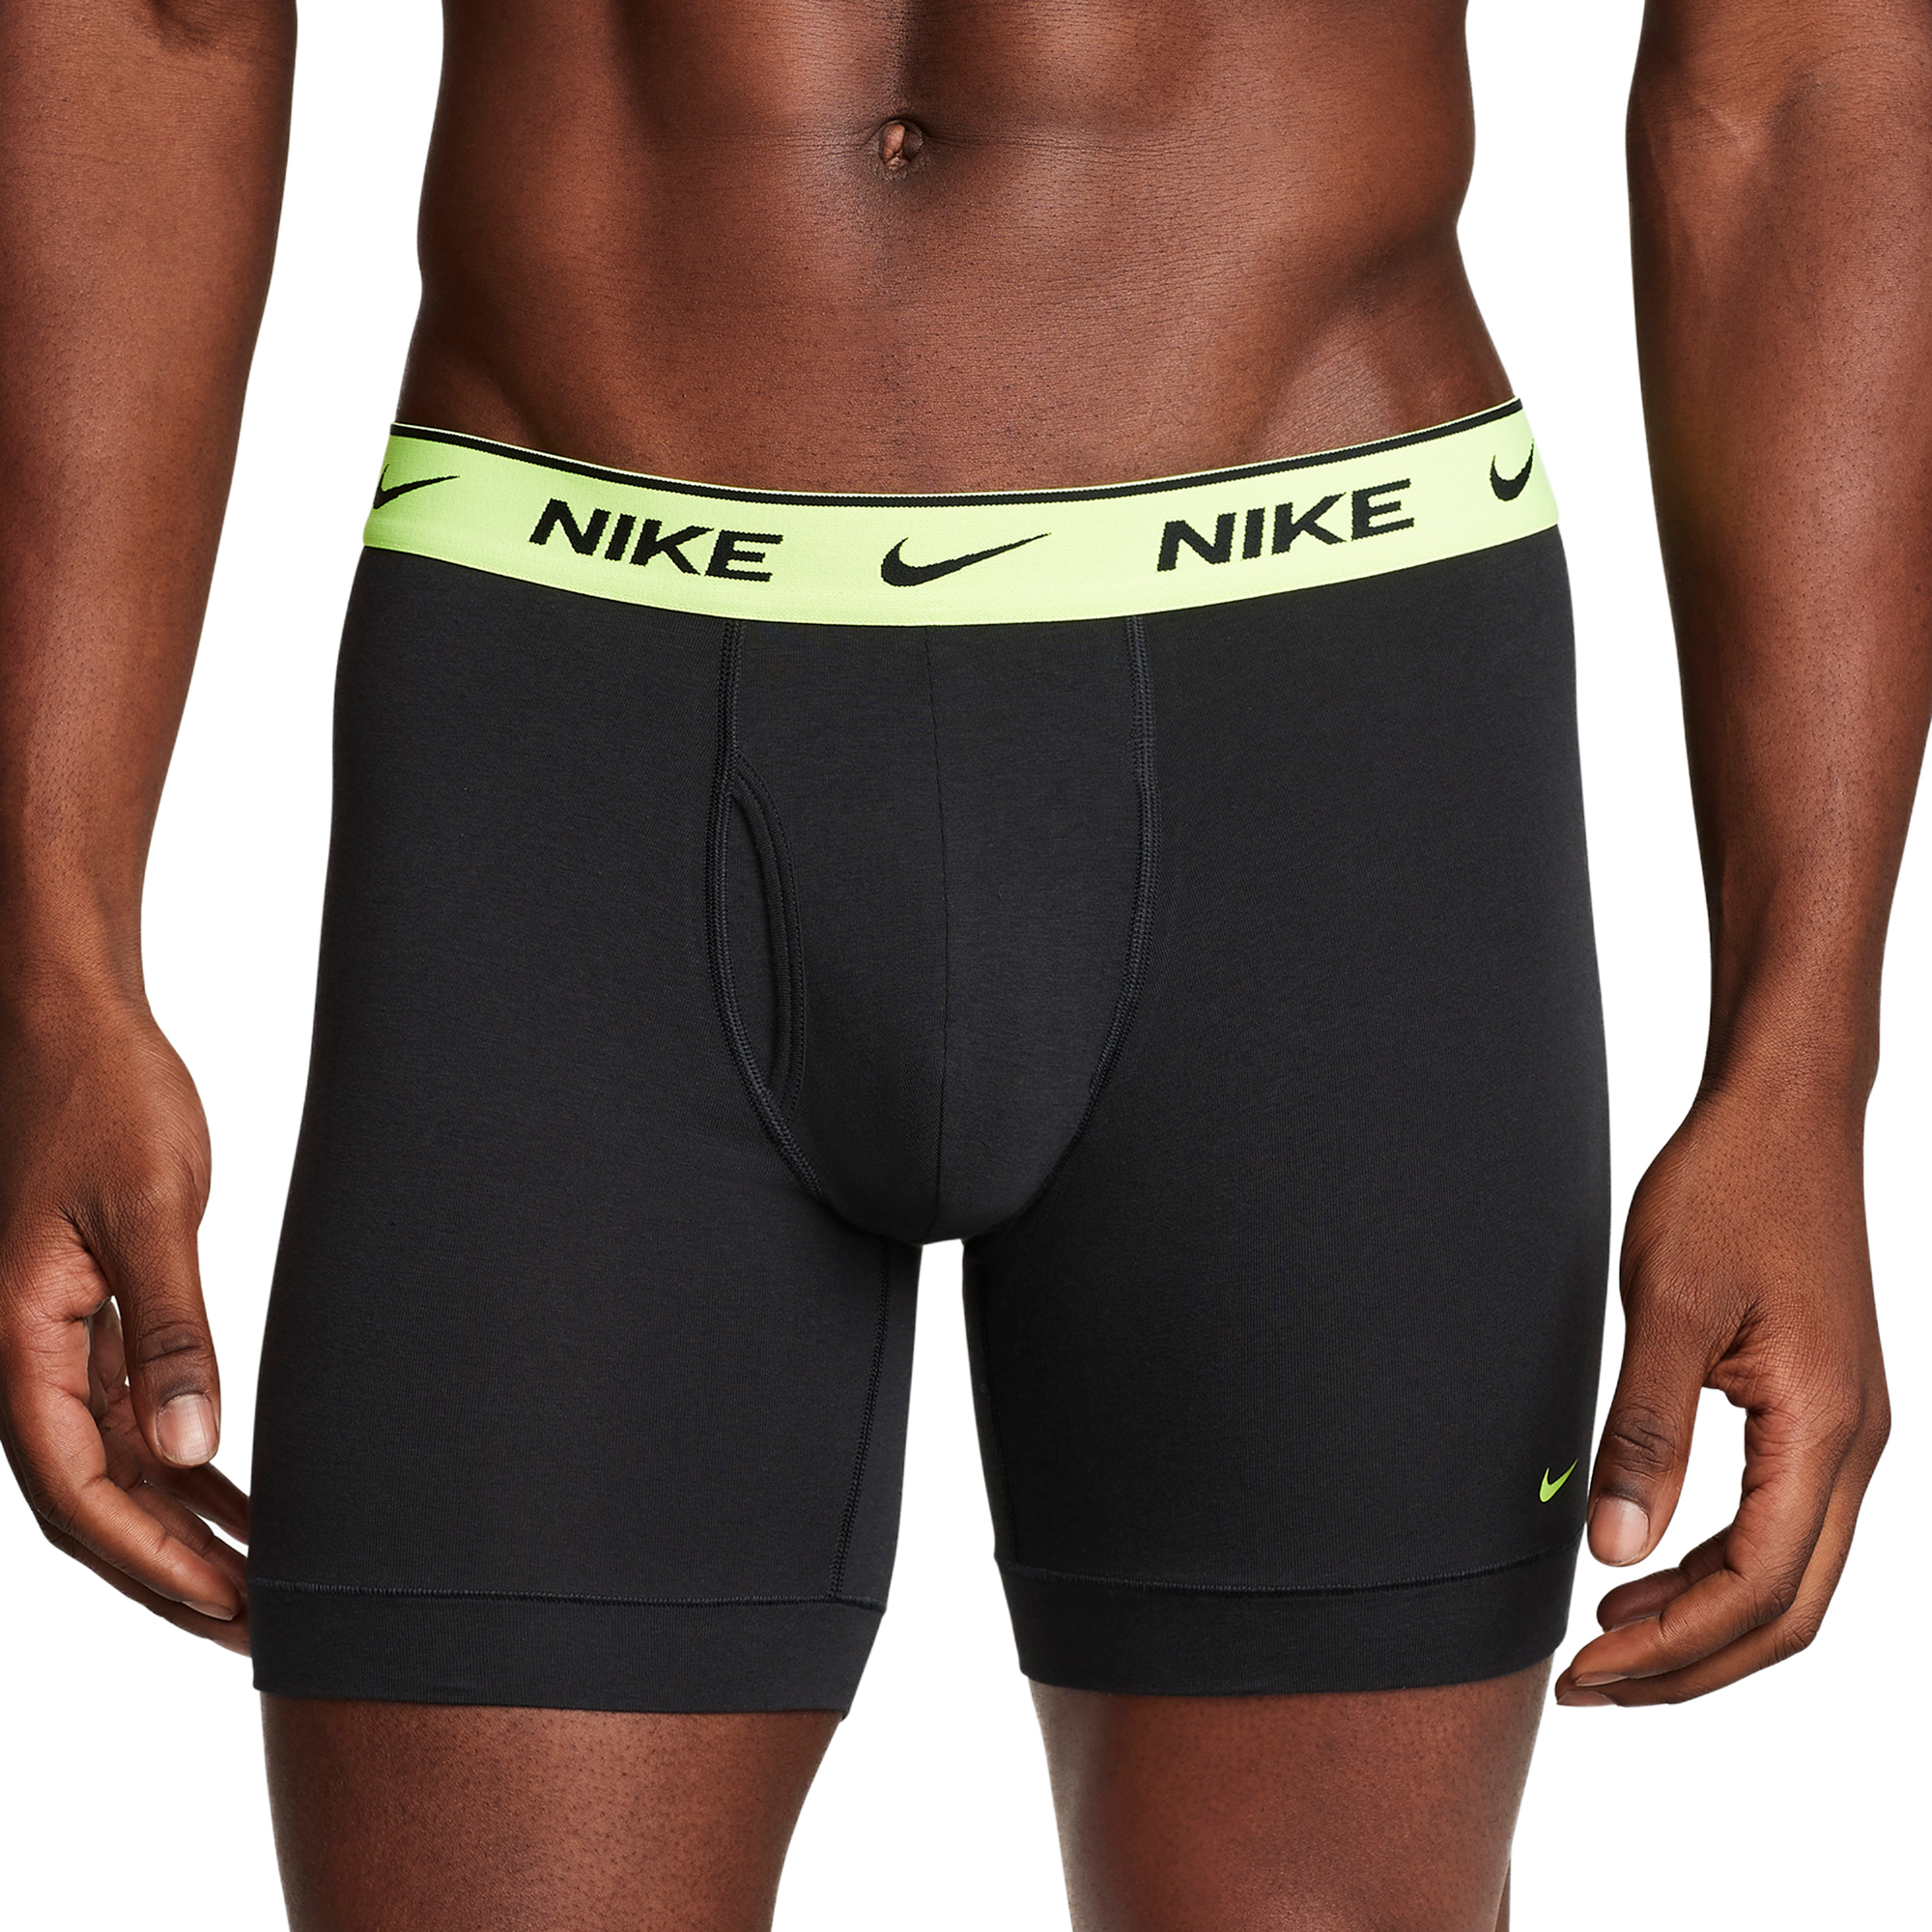 Nike Underwear Nike Everyday Cotton Stretch 3 PK Black Boxer Briefs Mens SM  NEW